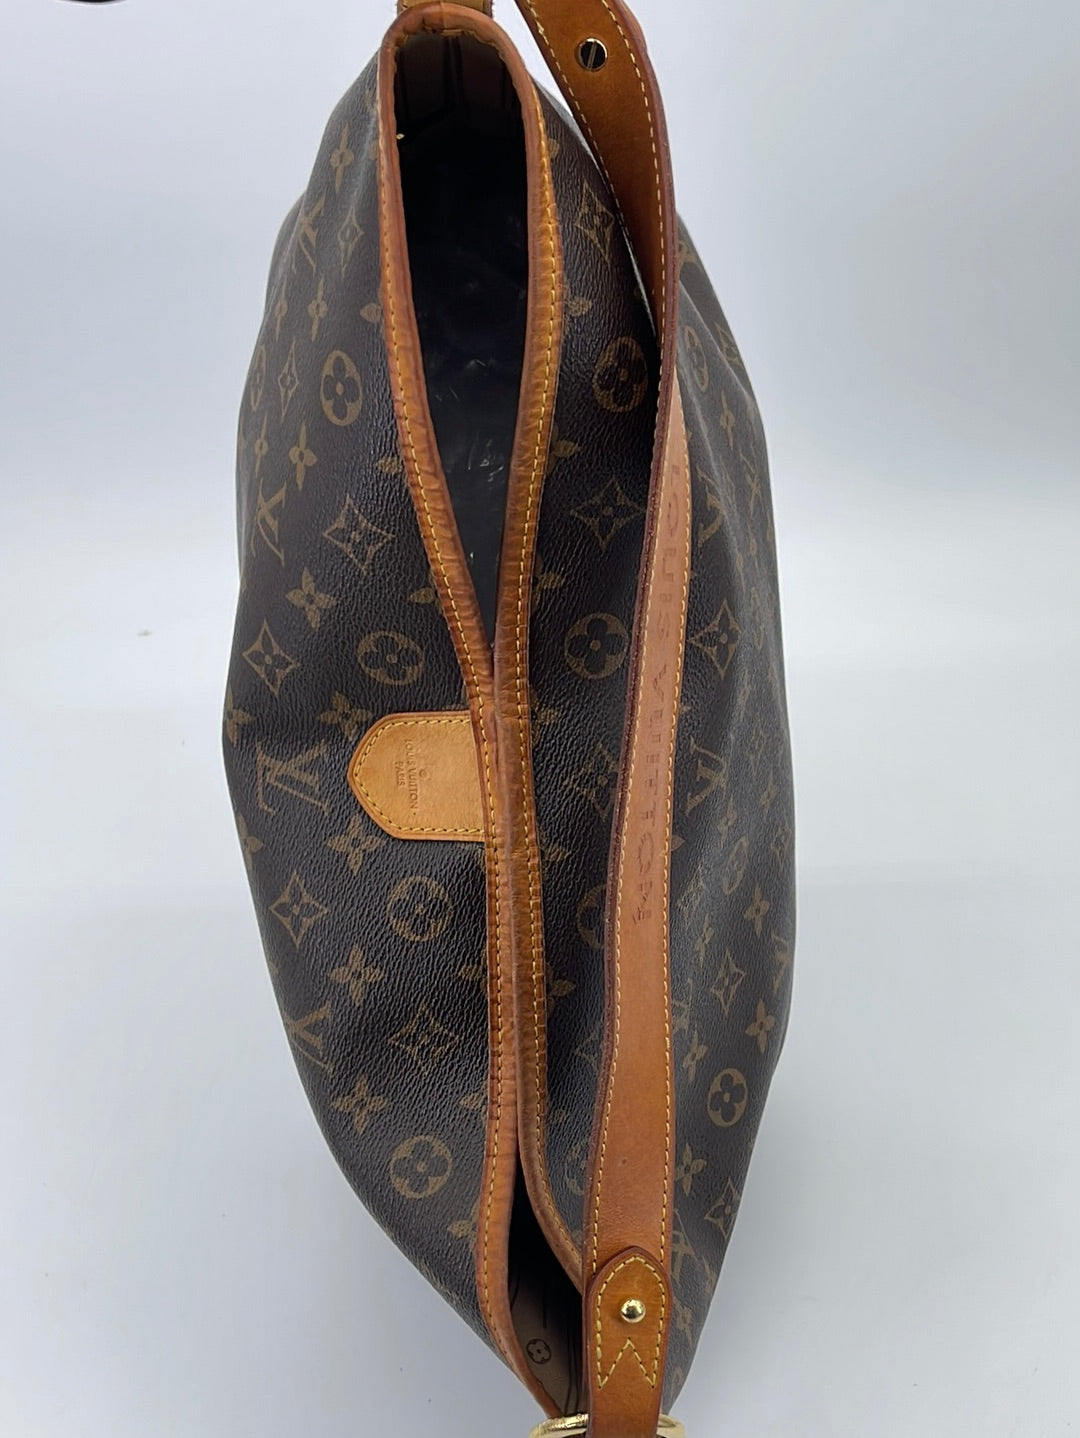 Preloved Louis Vuitton Delightful PM Monogram Bag SD2173 011723 LS –  KimmieBBags LLC